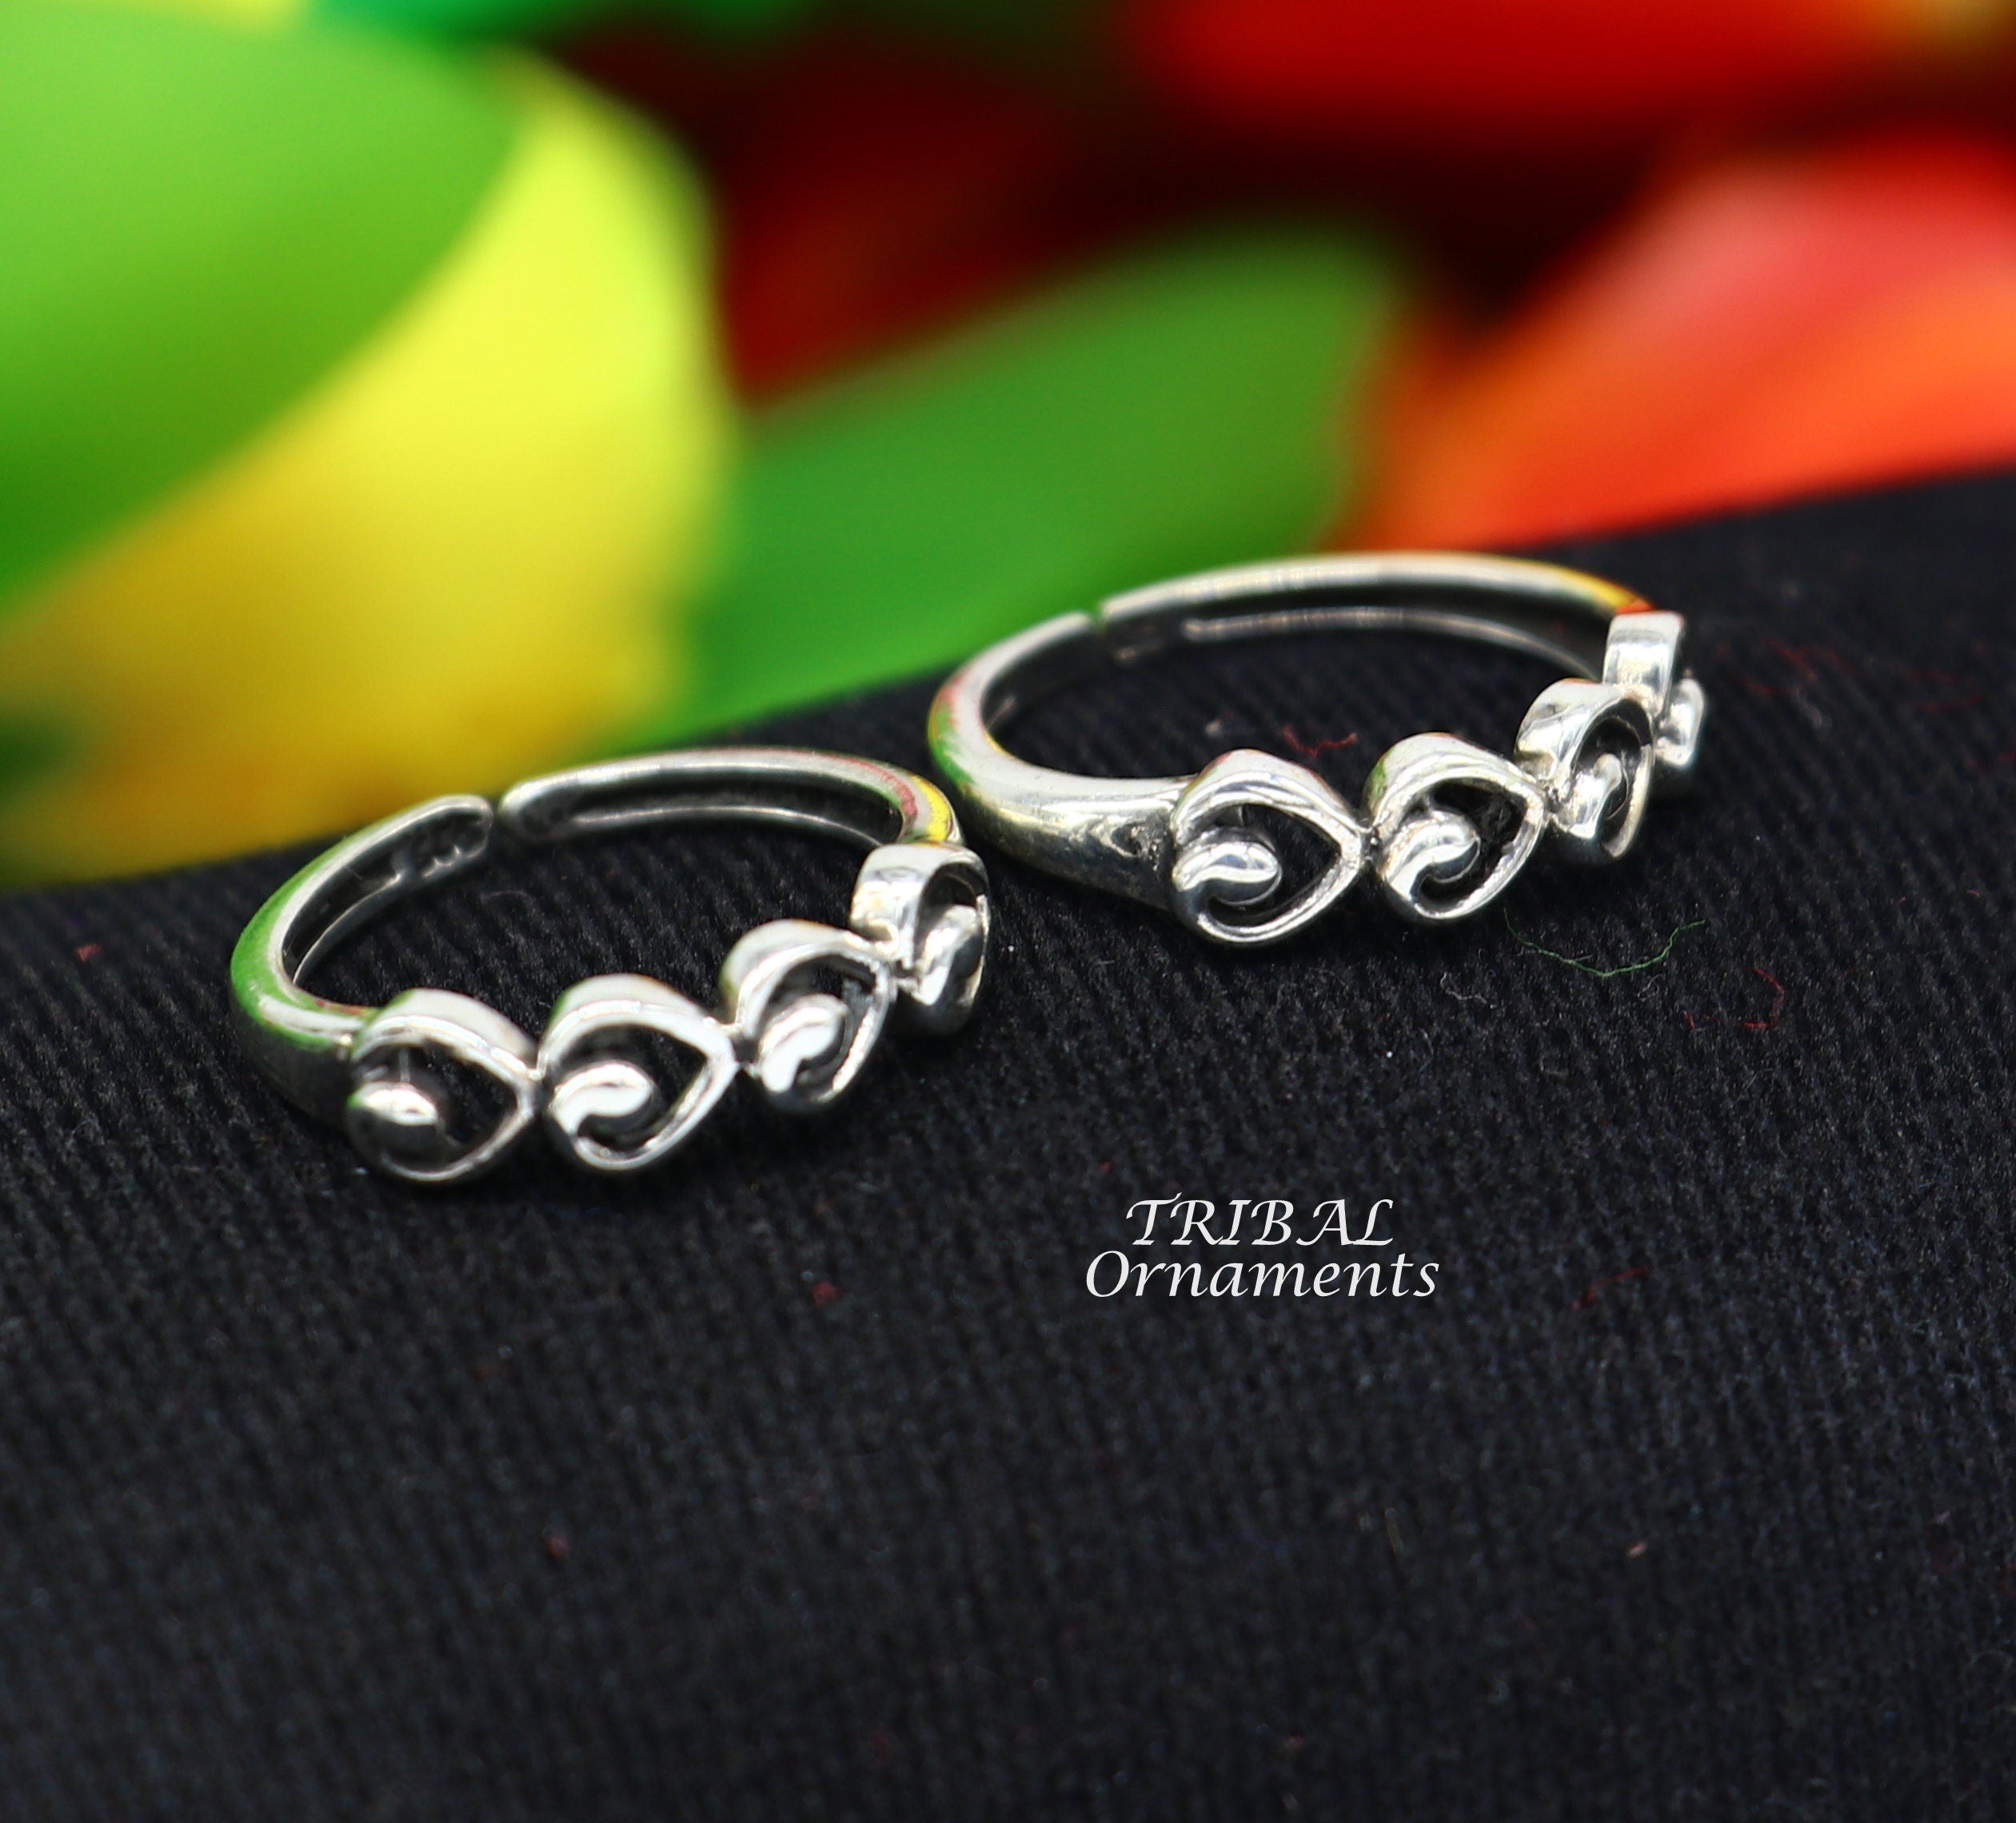 Amazon.com: BORUO Silver Ring – 925 Pure Sterling Silver Ring - Sterling Silver  Rings for Women – Elegant Silver Band Rings For Women and Men - Gifts for  Special Occasions 4mm Ring